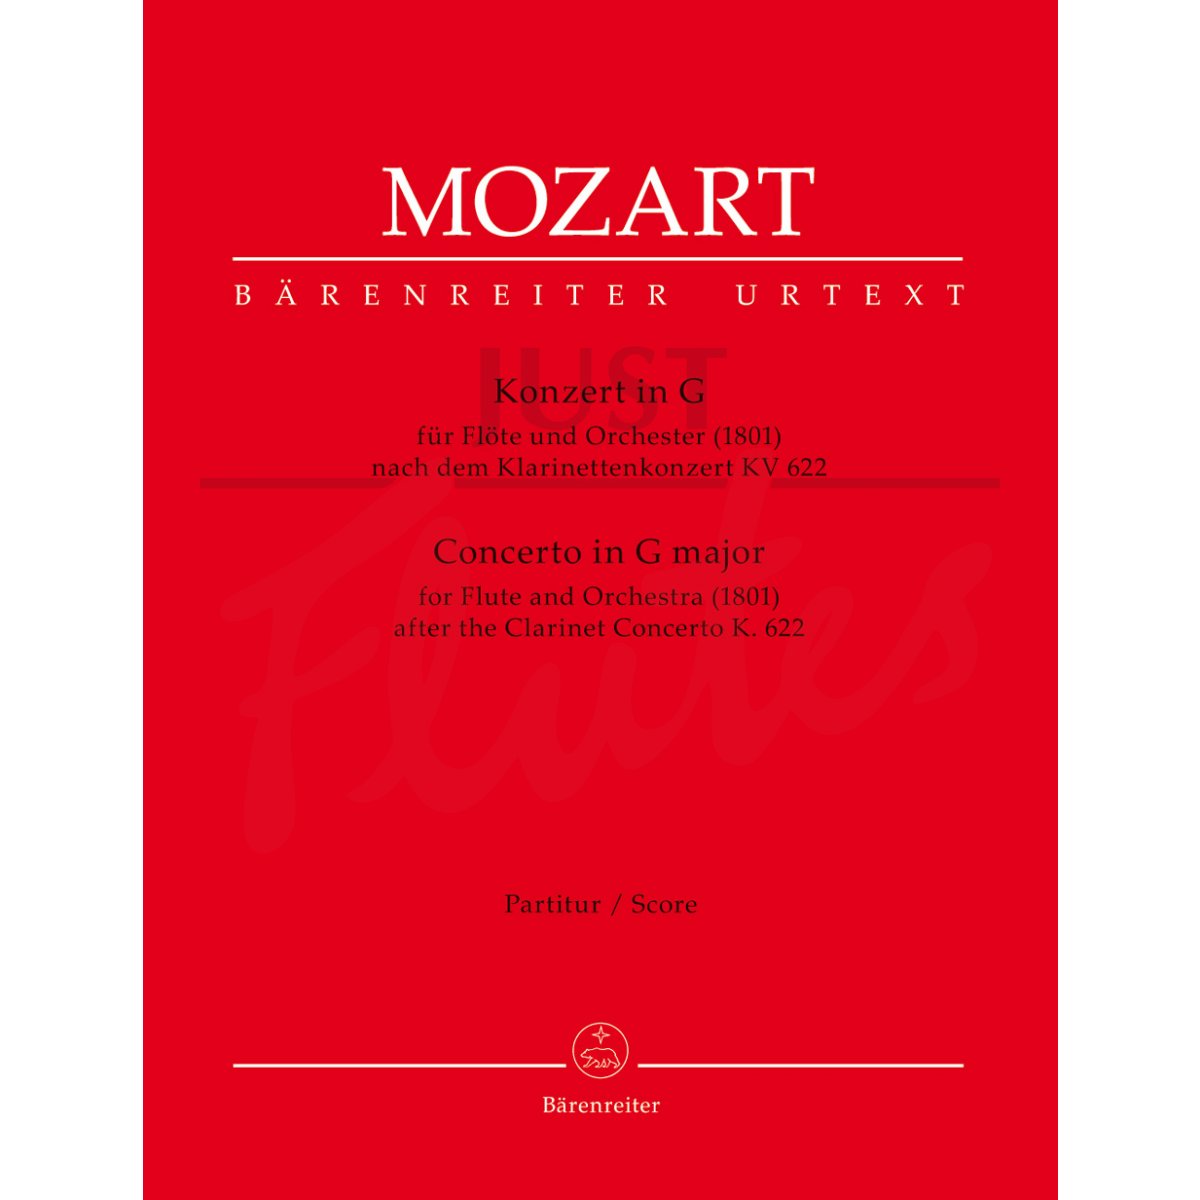 Concerto in G major after Clarinet Concerto K622